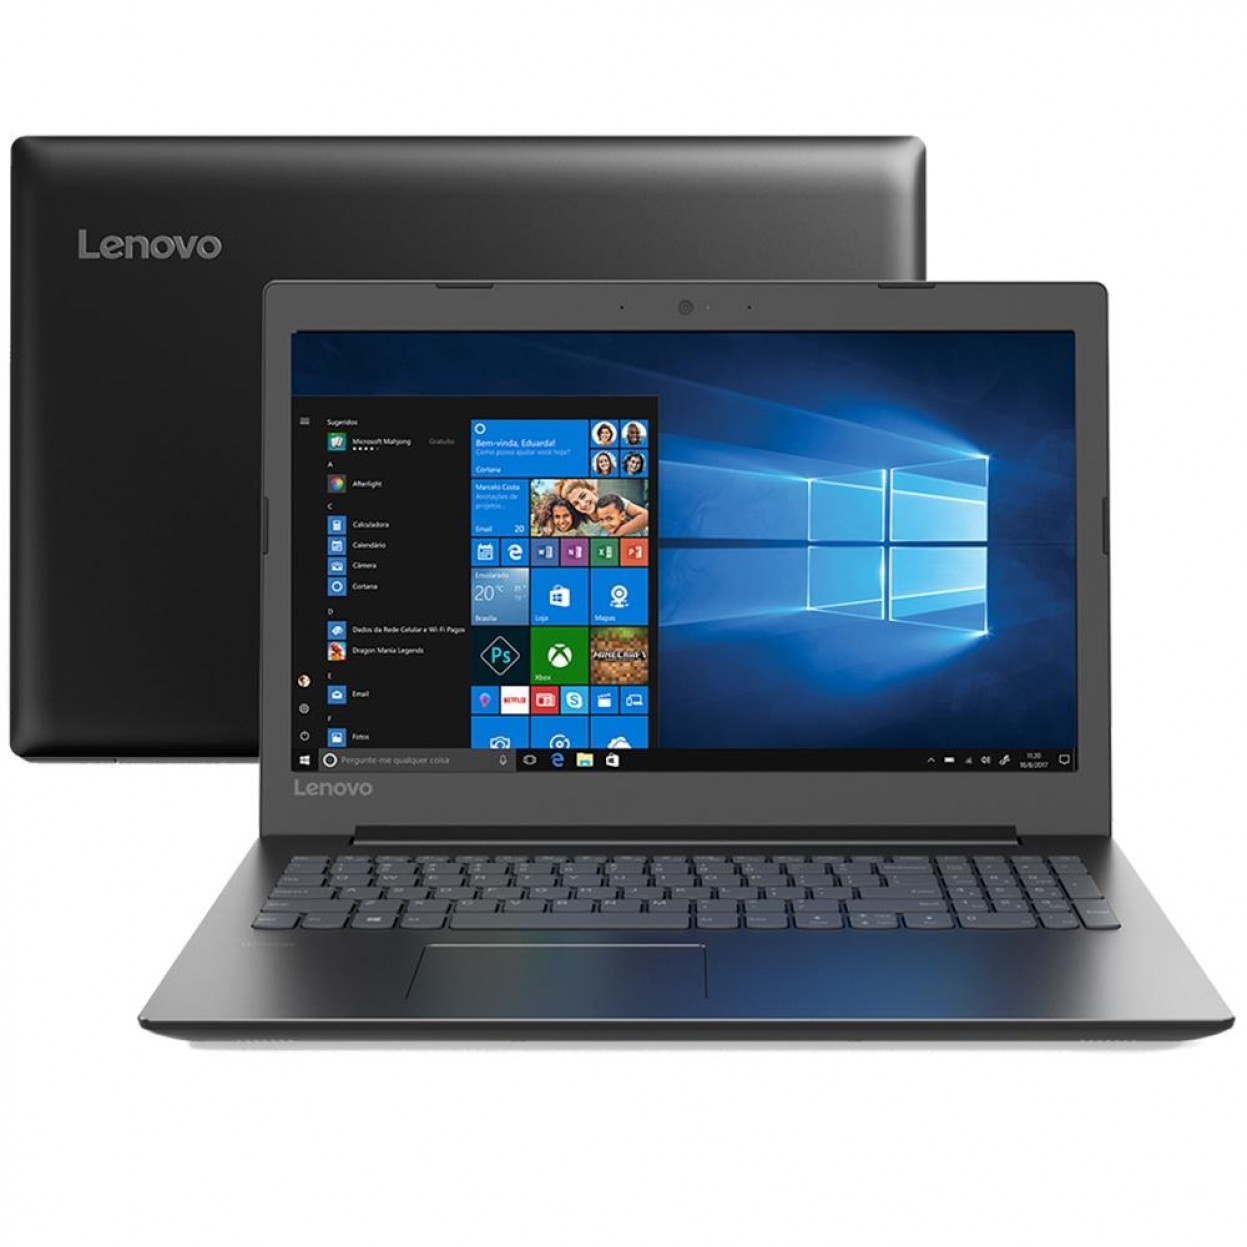 Notebook Lenovo B330 Core I5 8250u Memoria 4gb Ddr4 Ssd 120gb Tela 15.6' Fhd Windows 10 Home 